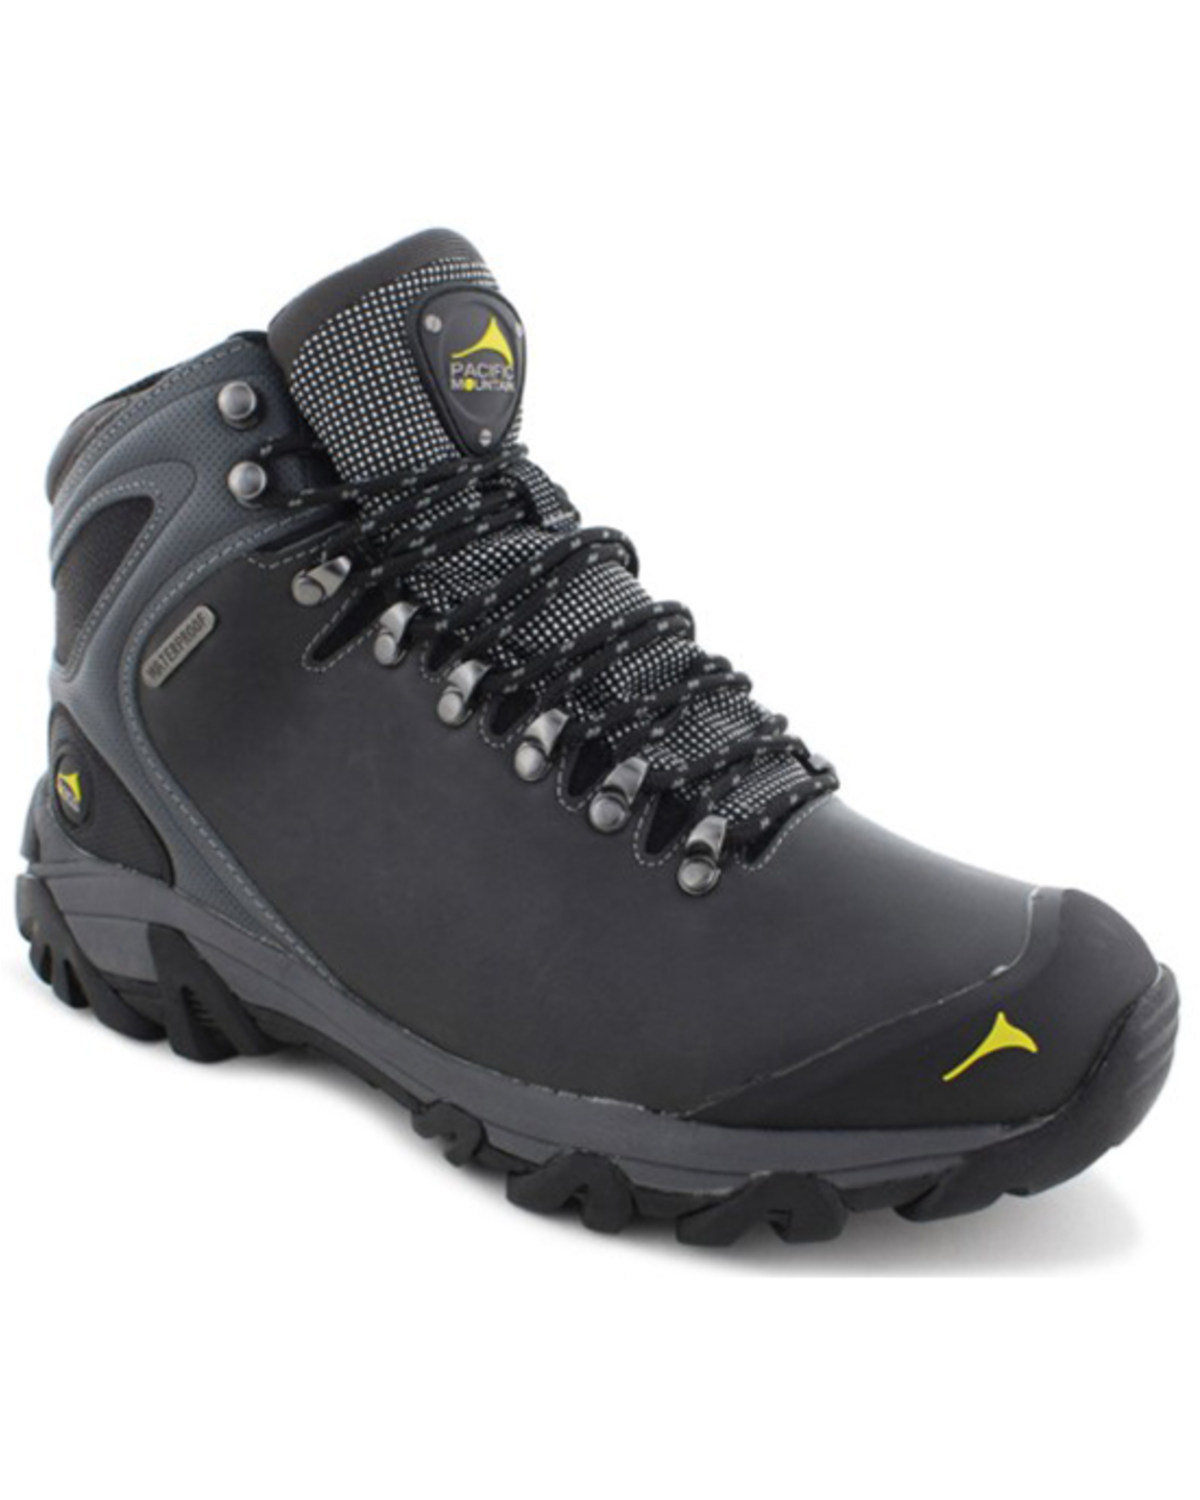 Pacific Mountain Men's Elbert Waterproof Hiking Boots - Soft Toe